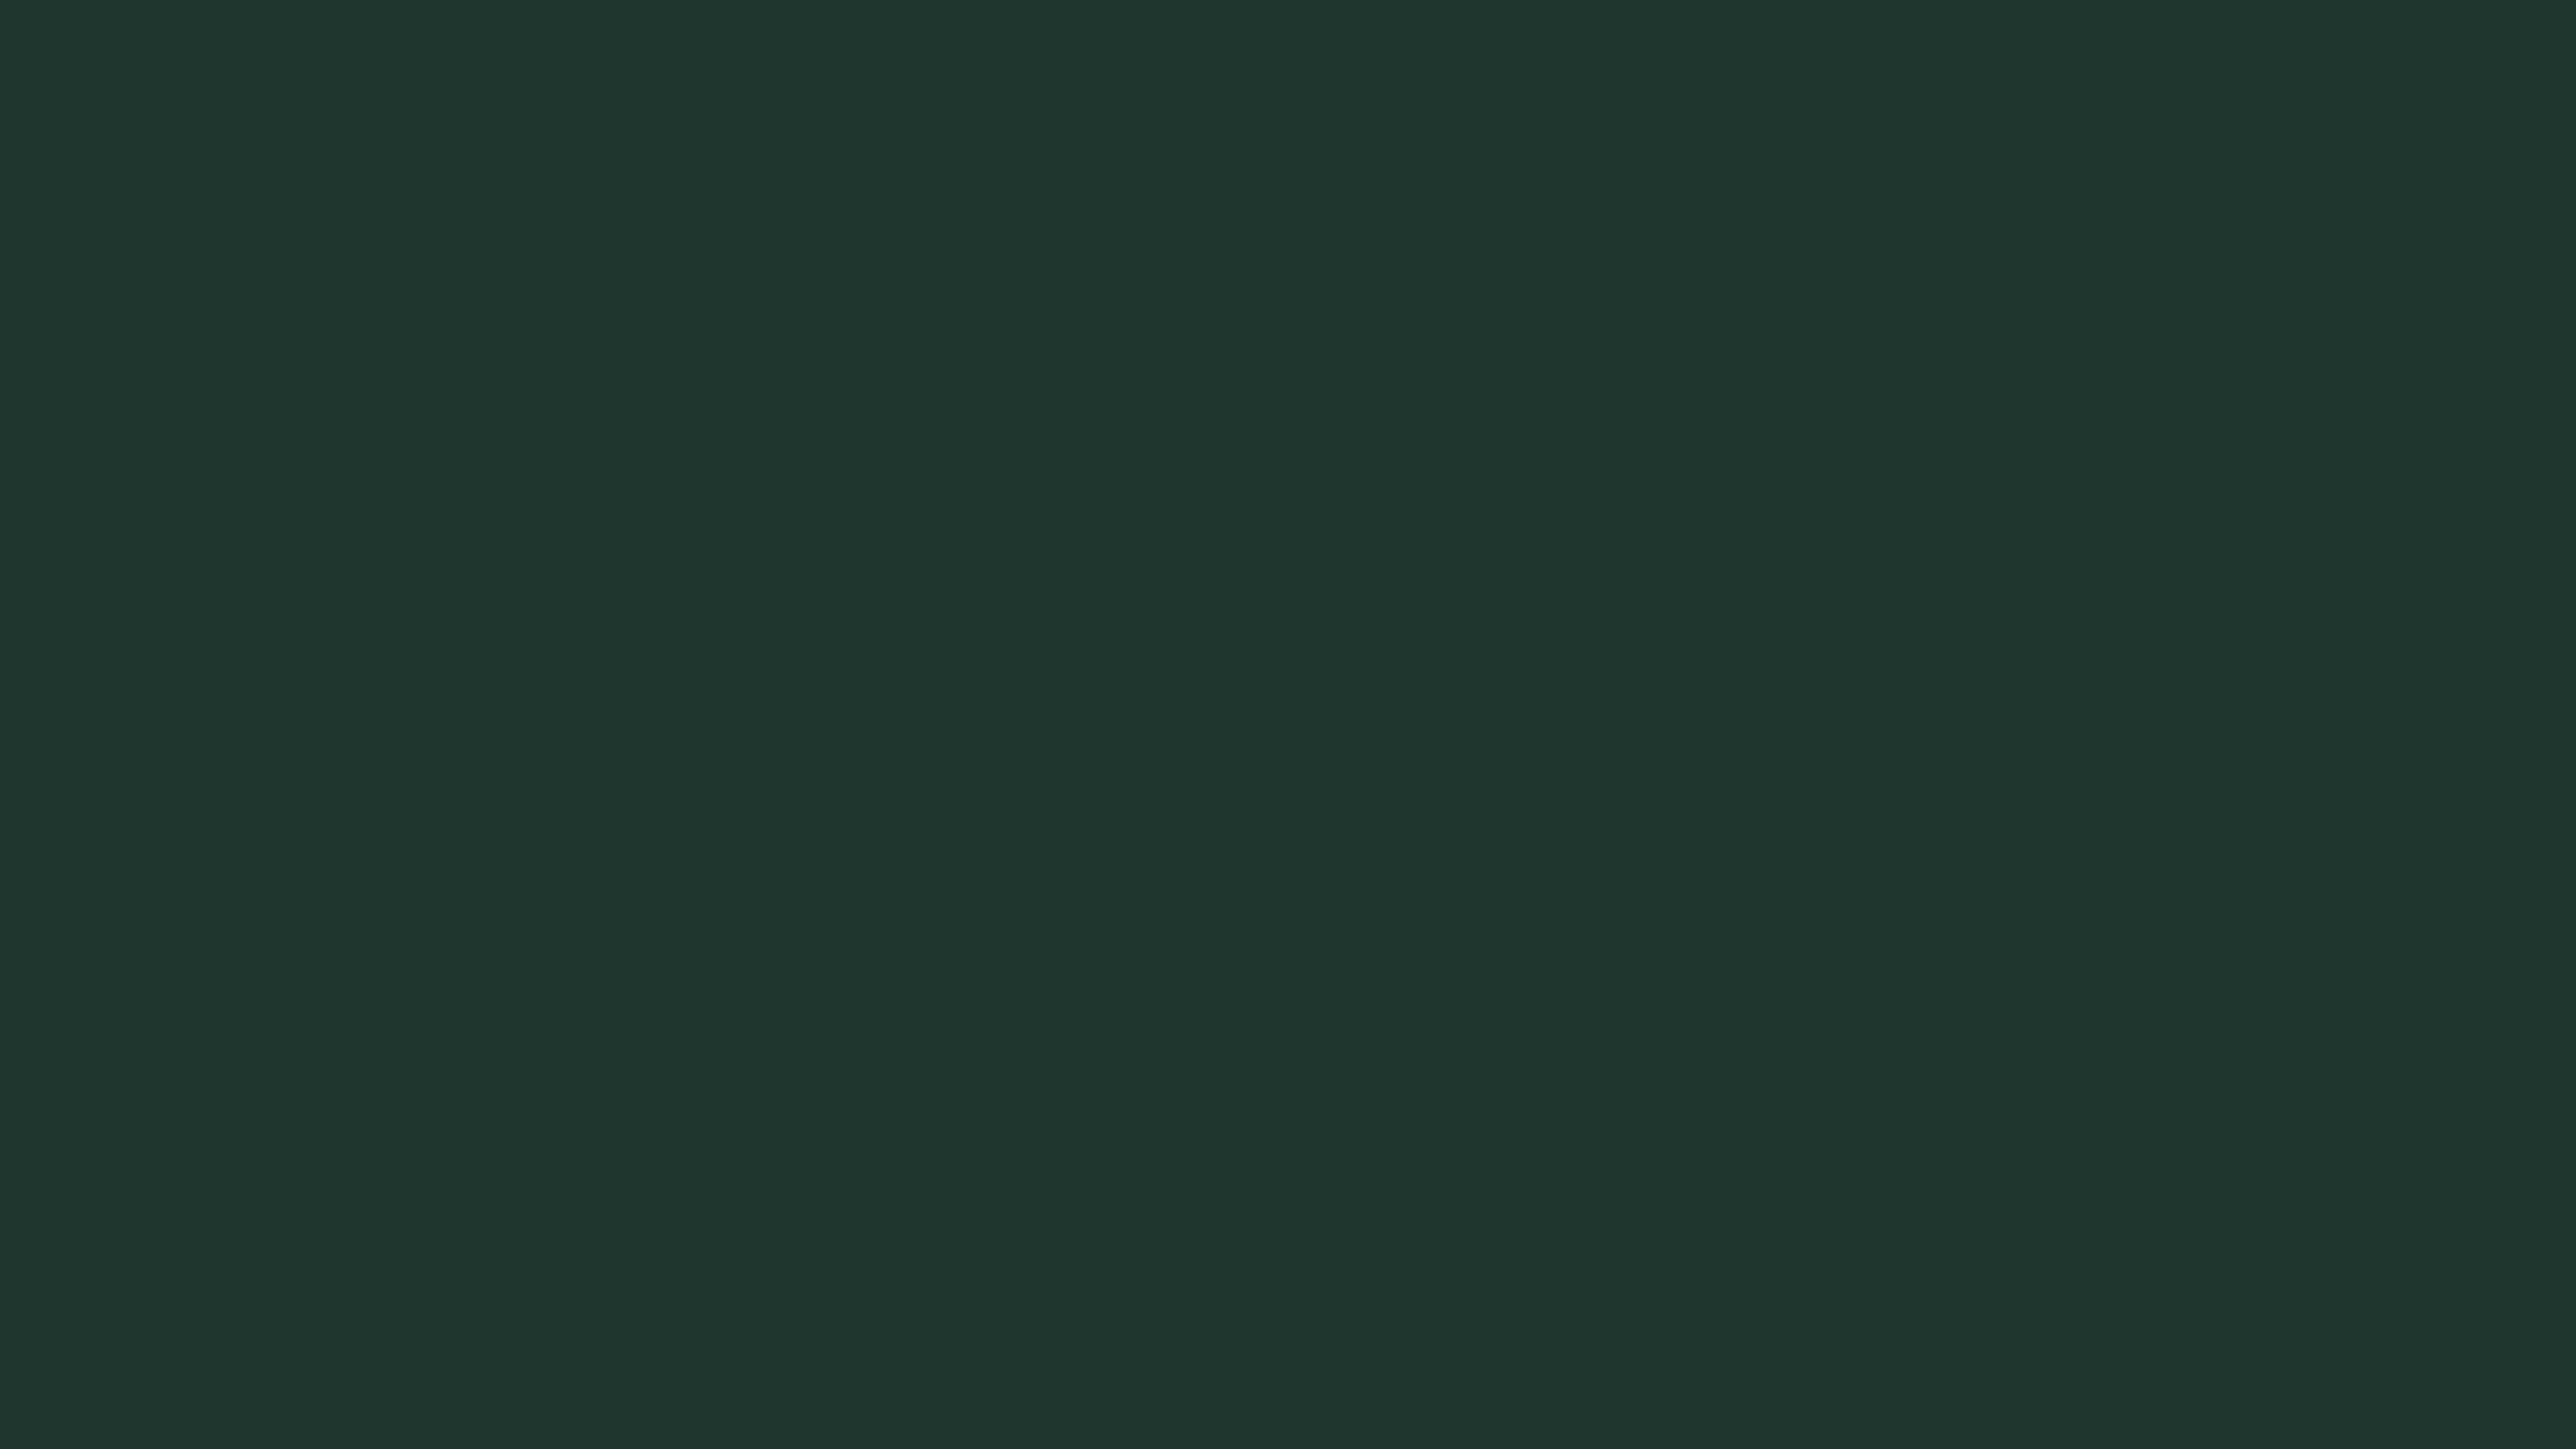 4096x2304 Medium Jungle Green Solid Color Background